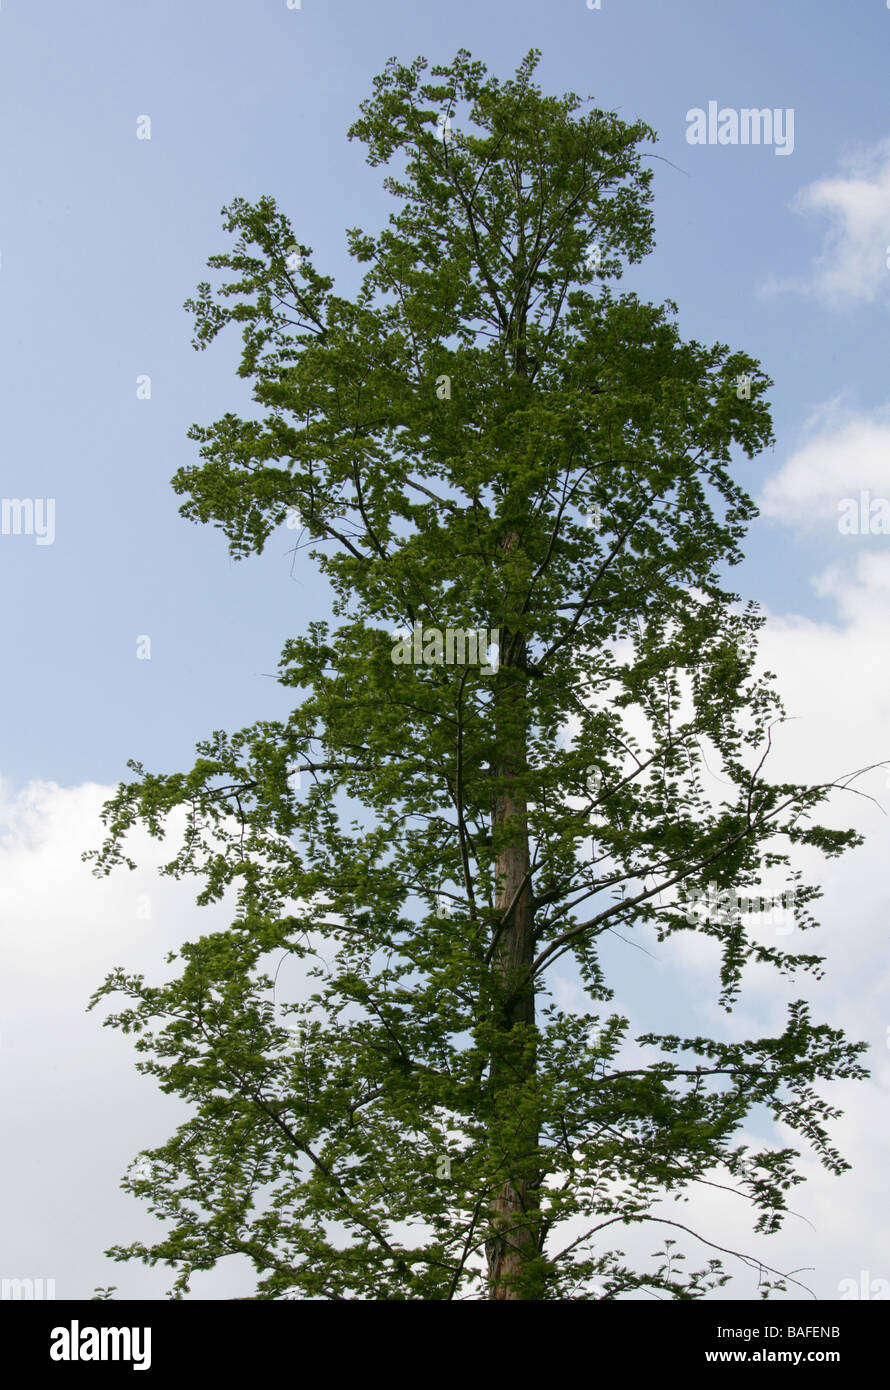 Dawn Redwood, Metasequoia glyptostroboides. Región de Sichuan Hubei, China Foto de stock